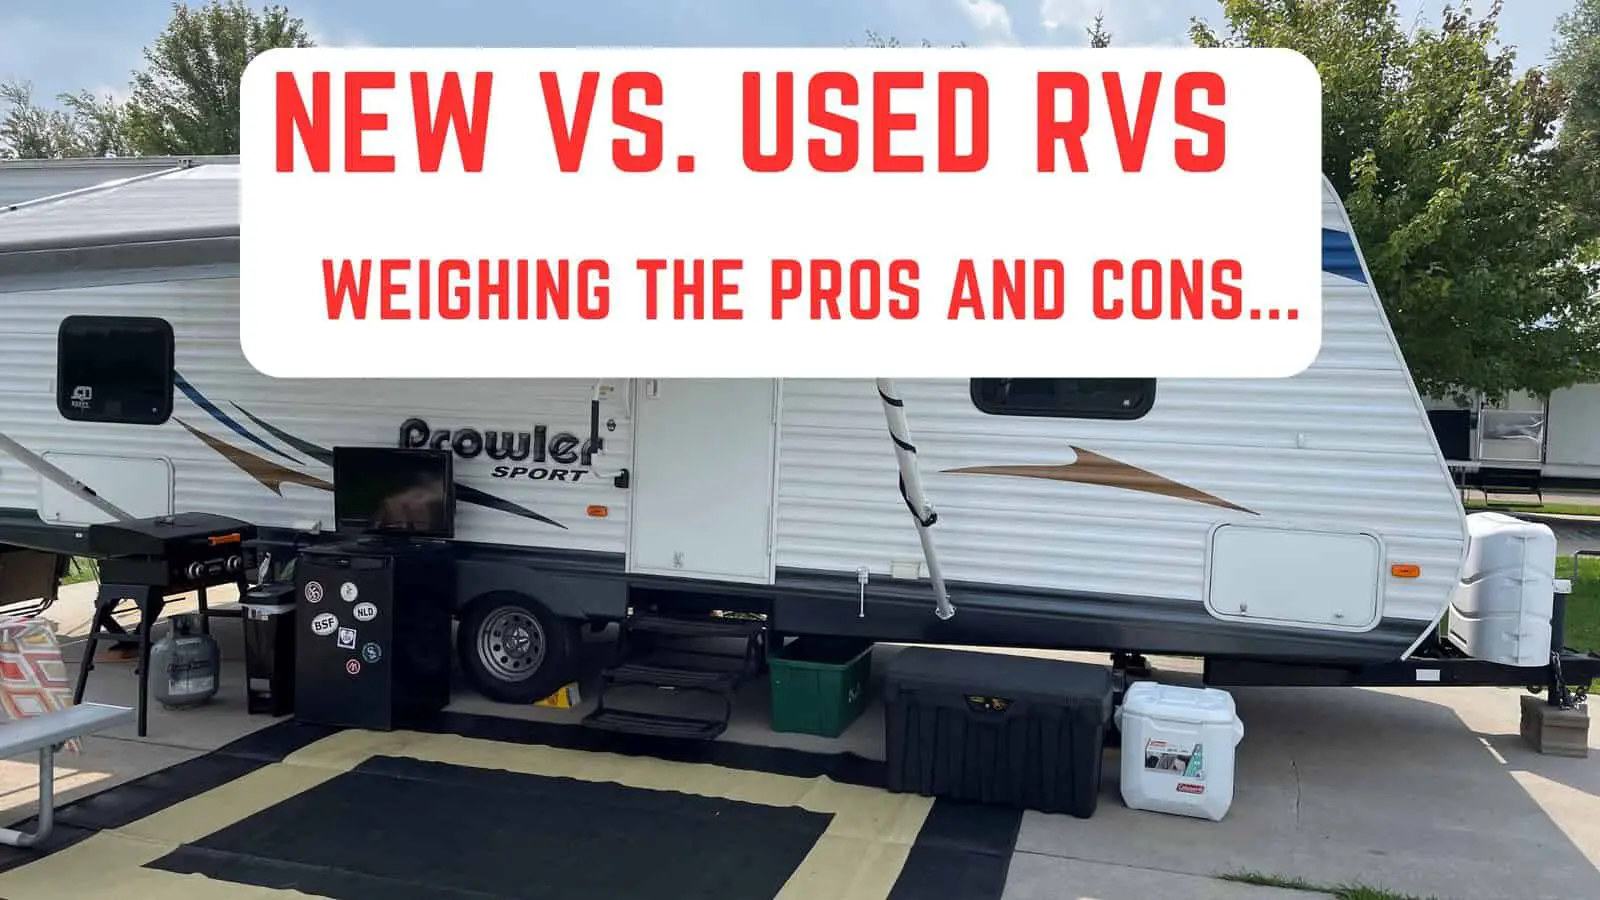 New vs. Used RVs